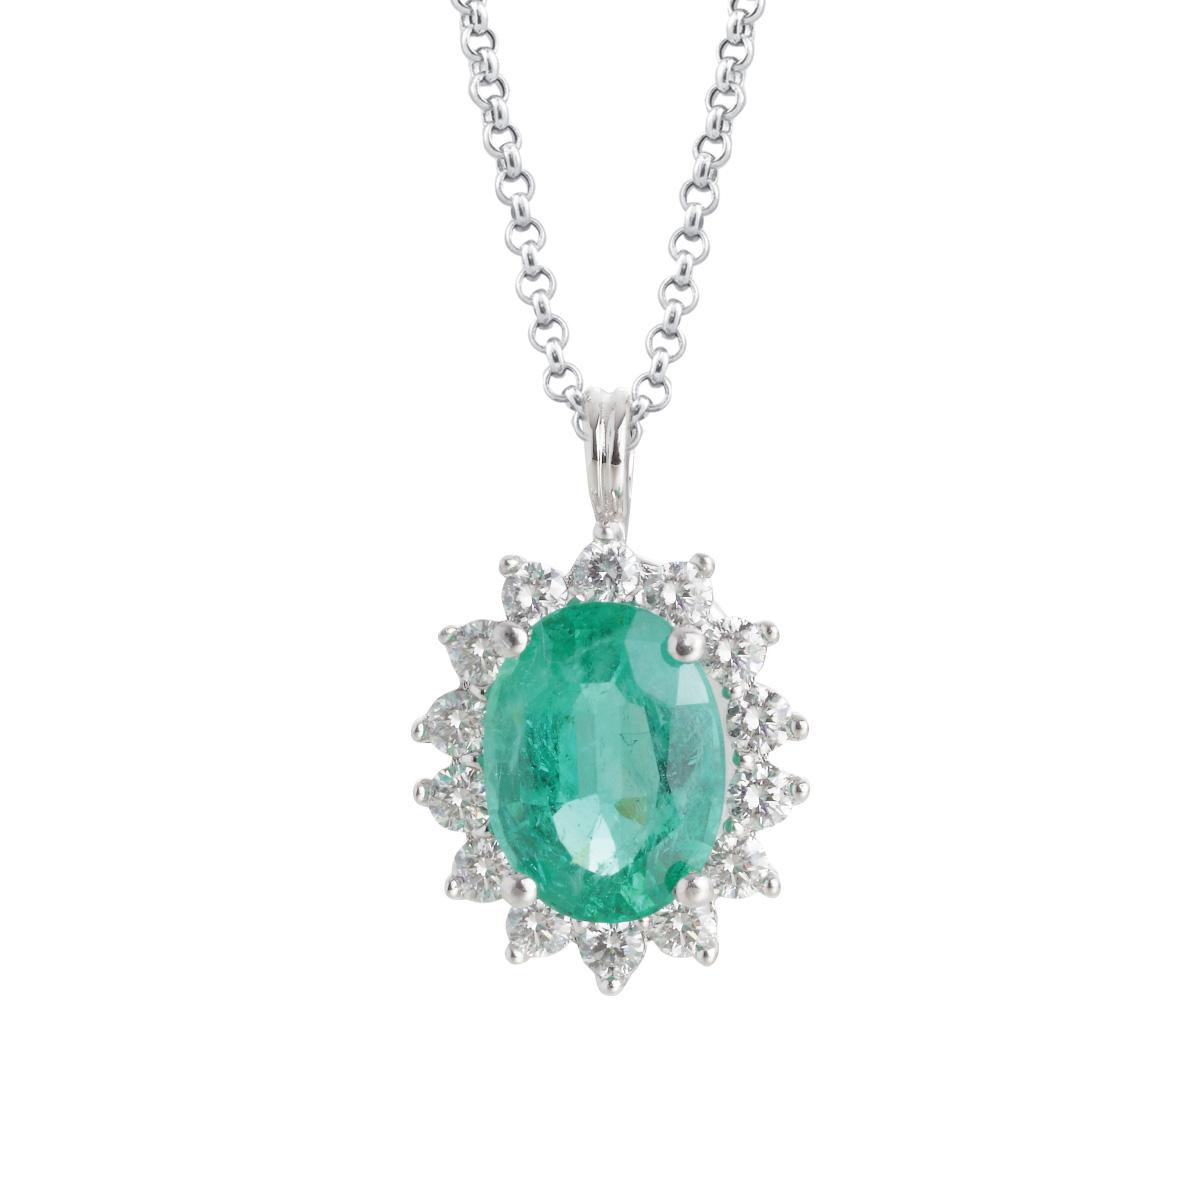 Necklace with Diamonds and Precious Stone